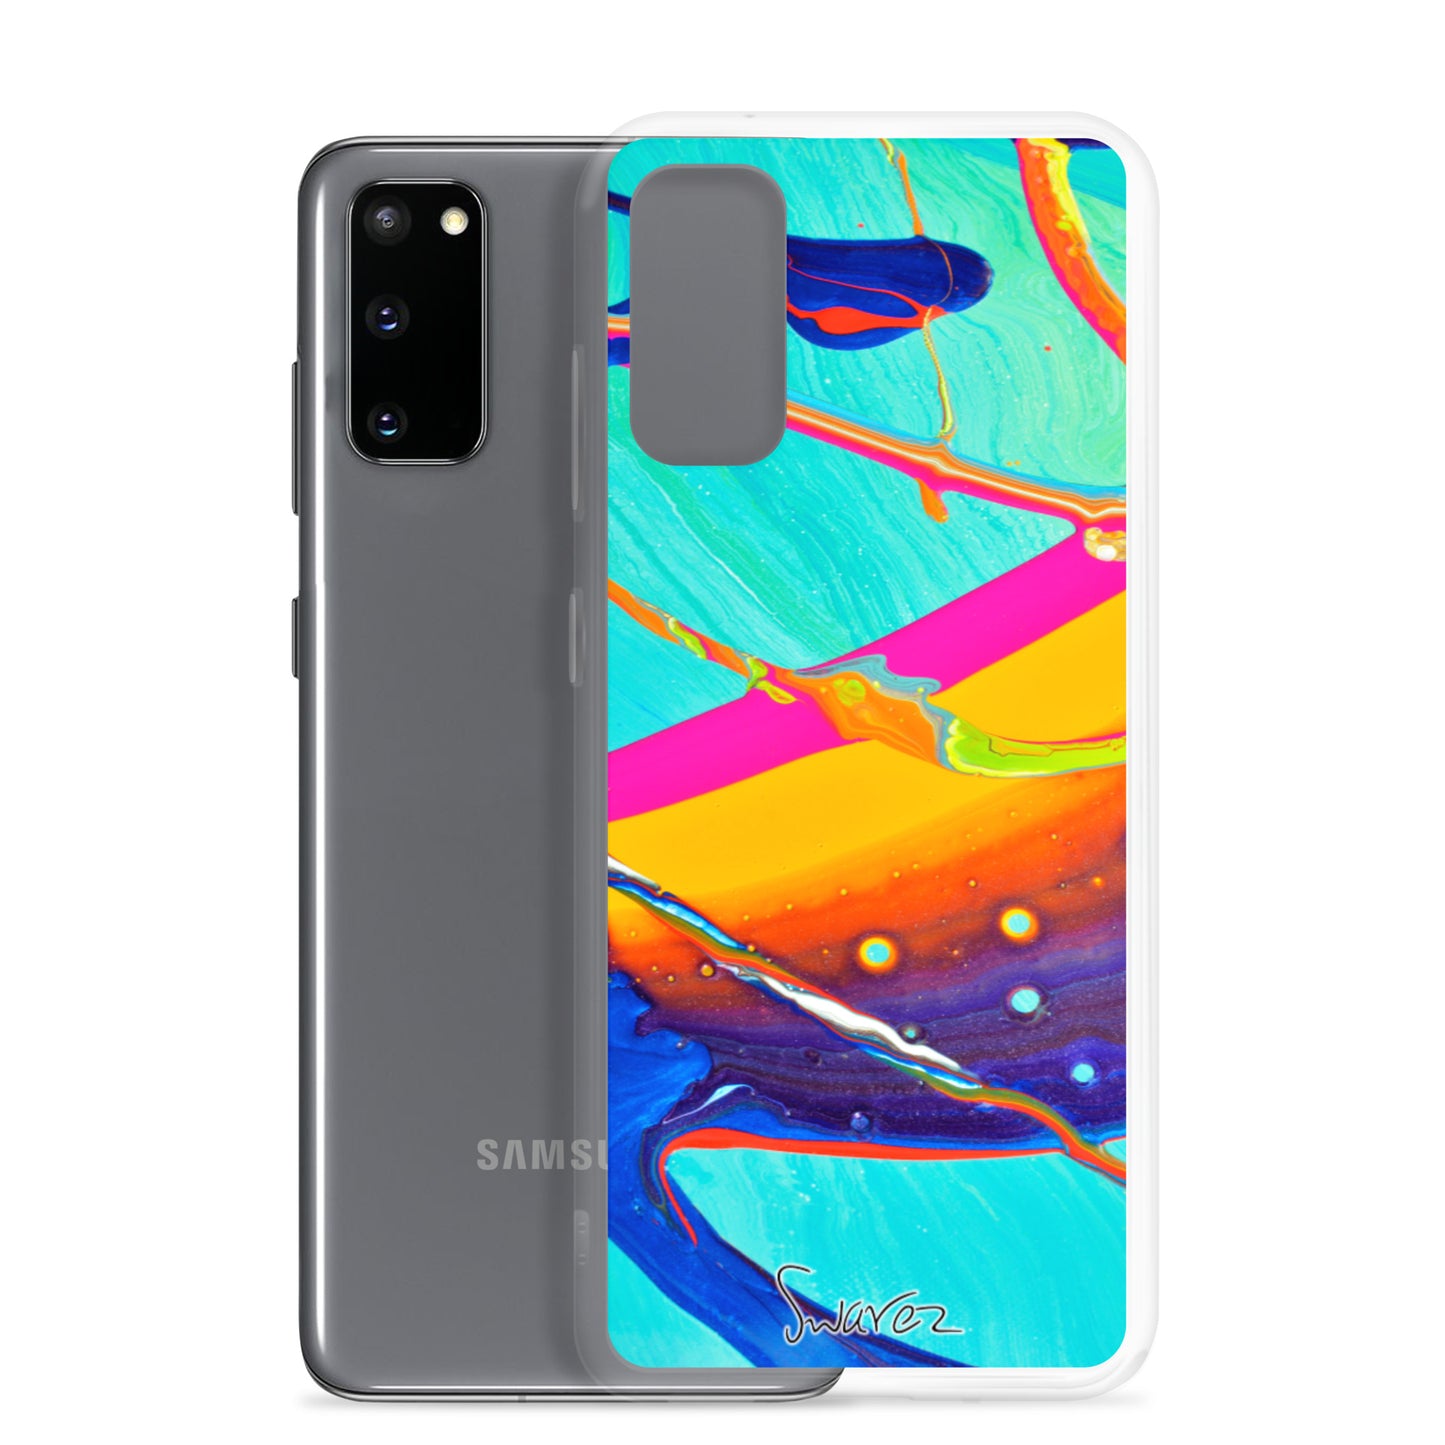 Capa Samsung - design arco-íris